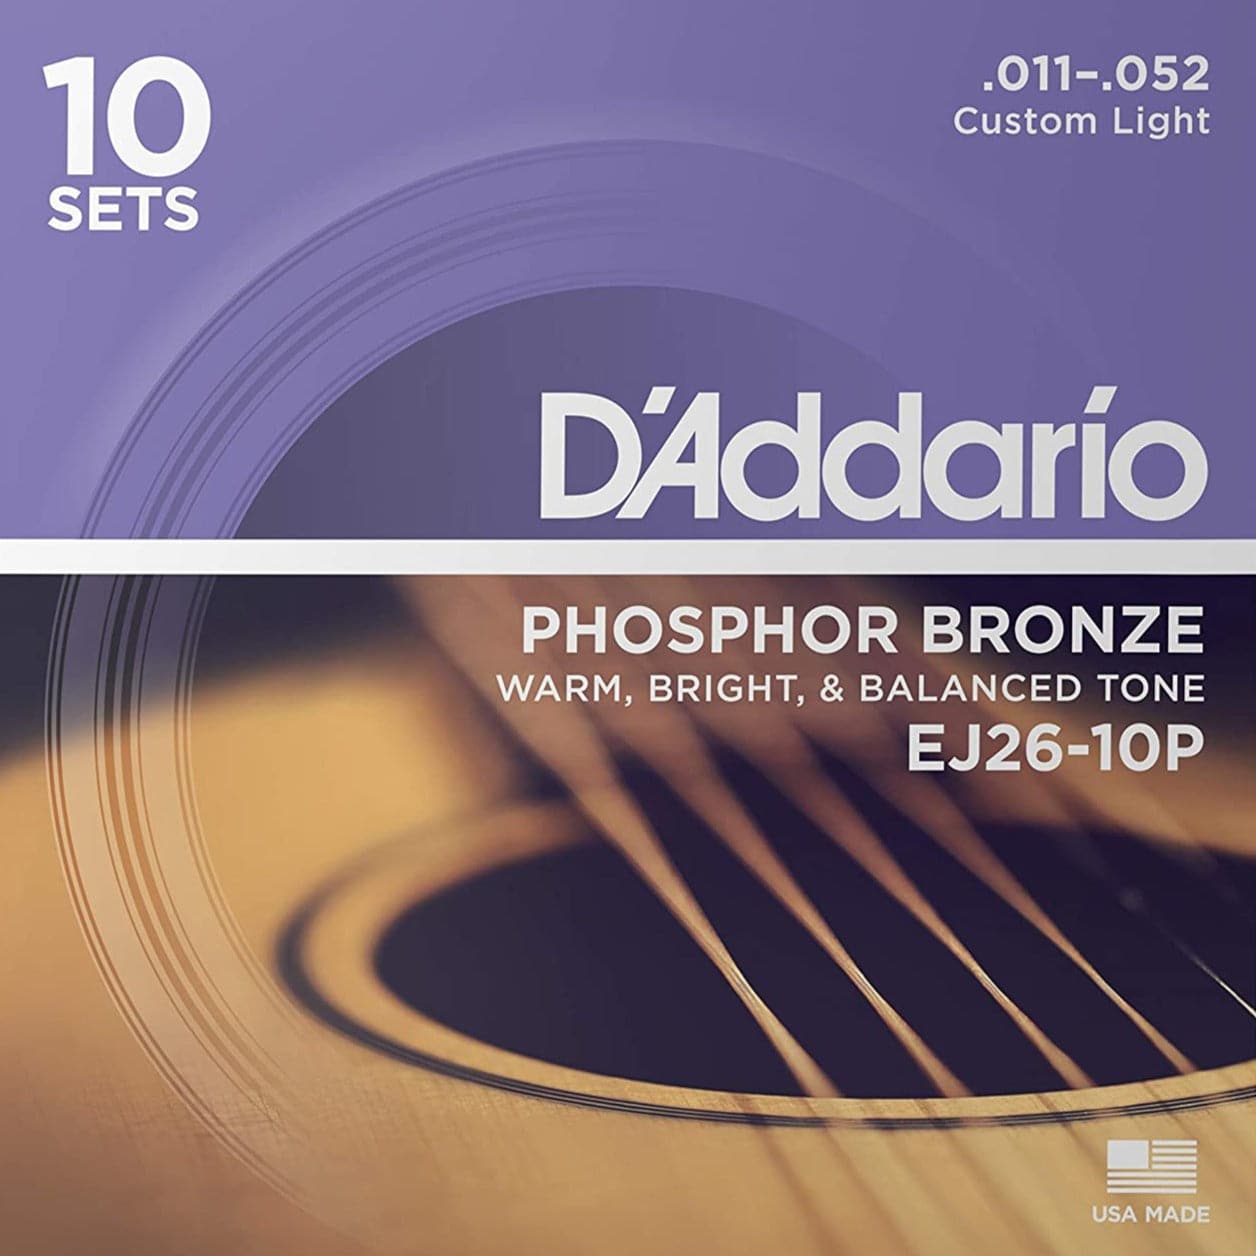 D'Addario EJ26-10P Phosphor Bronze Acoustic Guitar Strings Custom Light 11-52 10 Pack